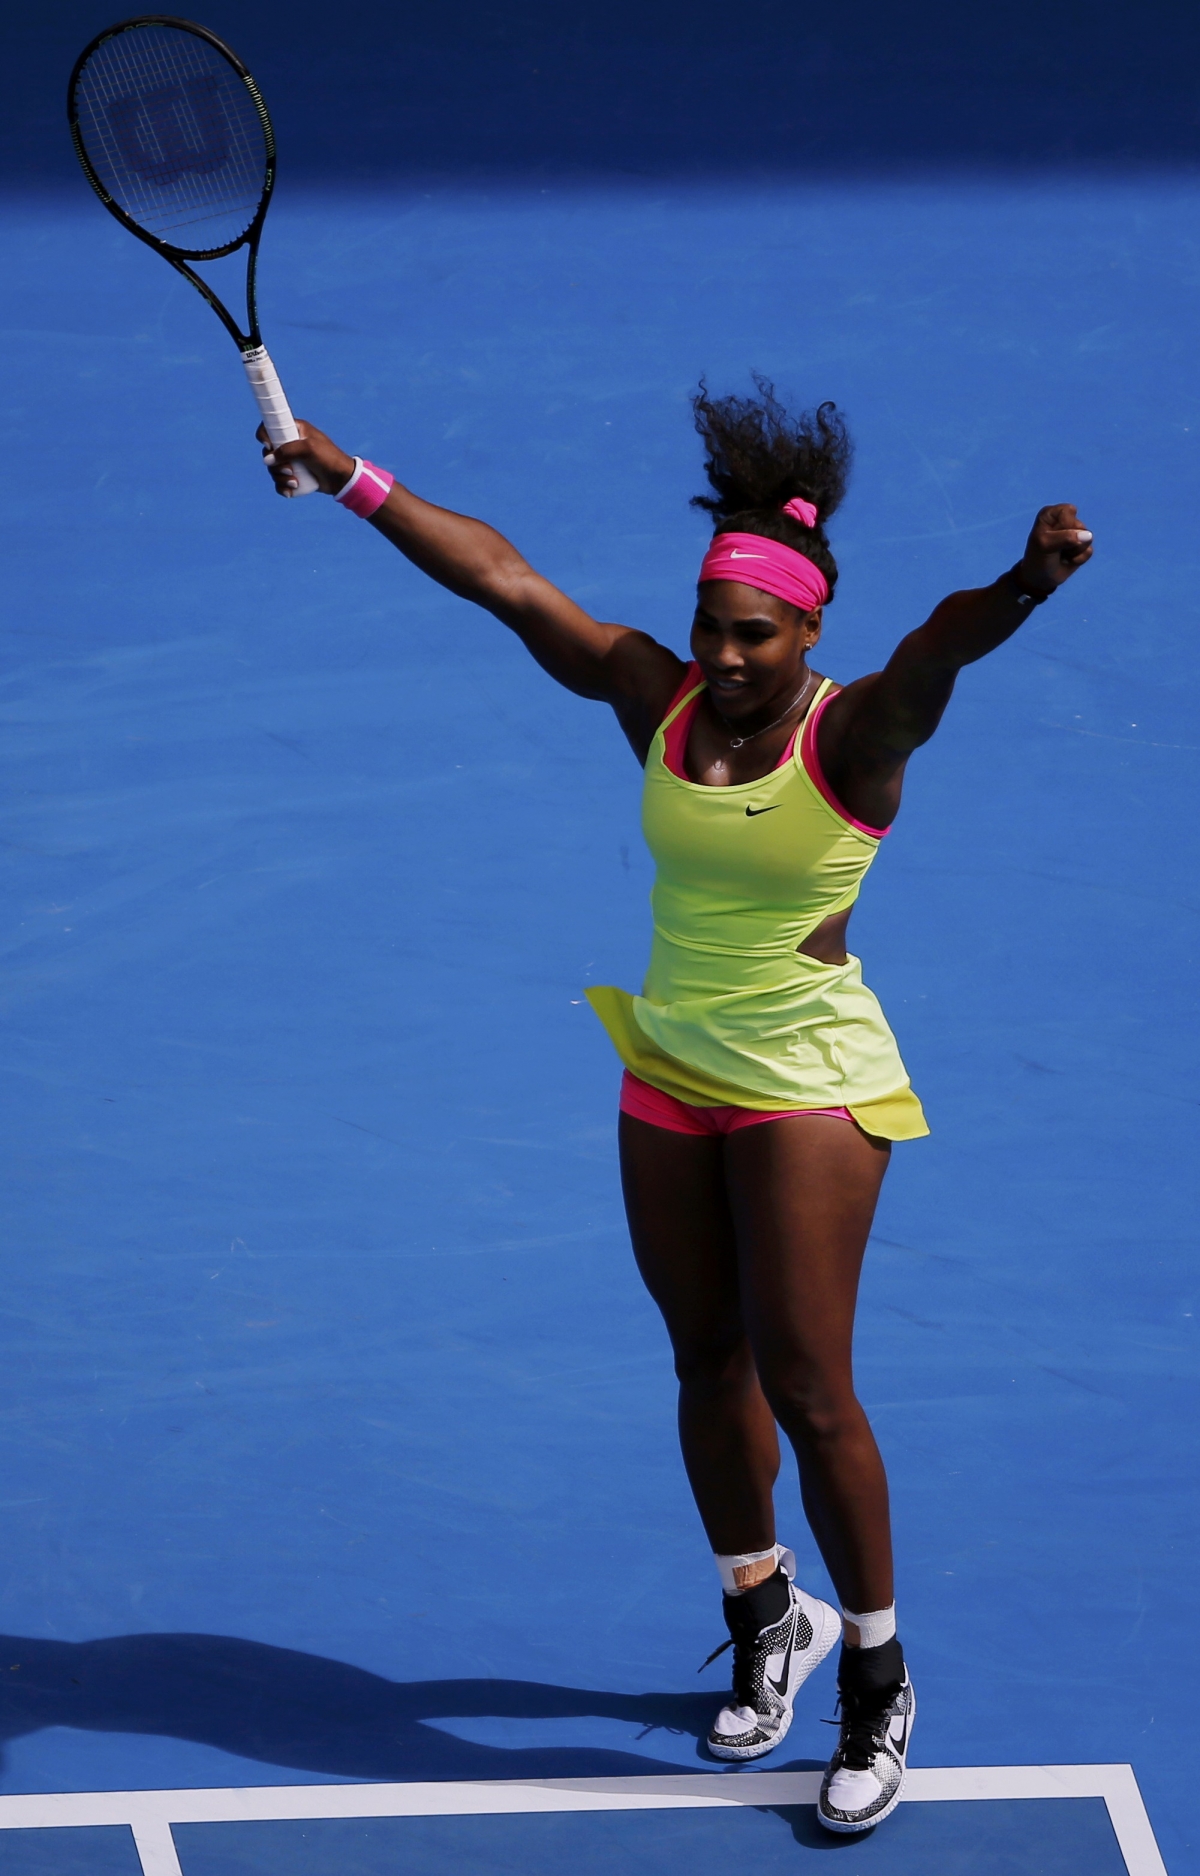 Watch Australian Open Live Venus Williams vs Madison Keys and Serena Williams vs Dominika Cibulkova Live Streaming Information